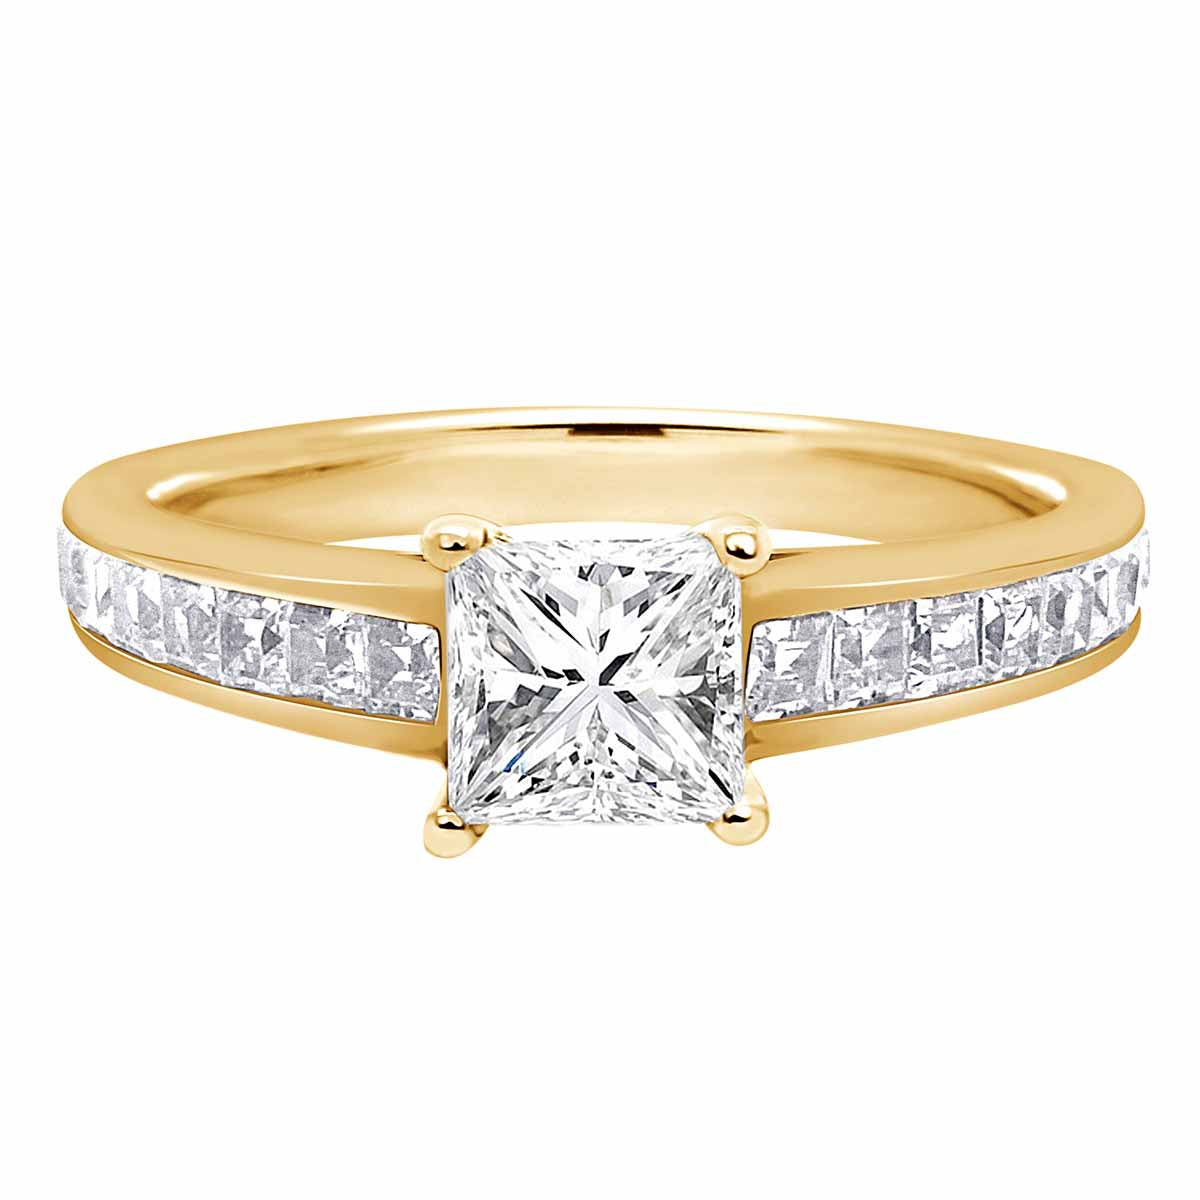 Princess Shape Diamond Ring made from yellow gold